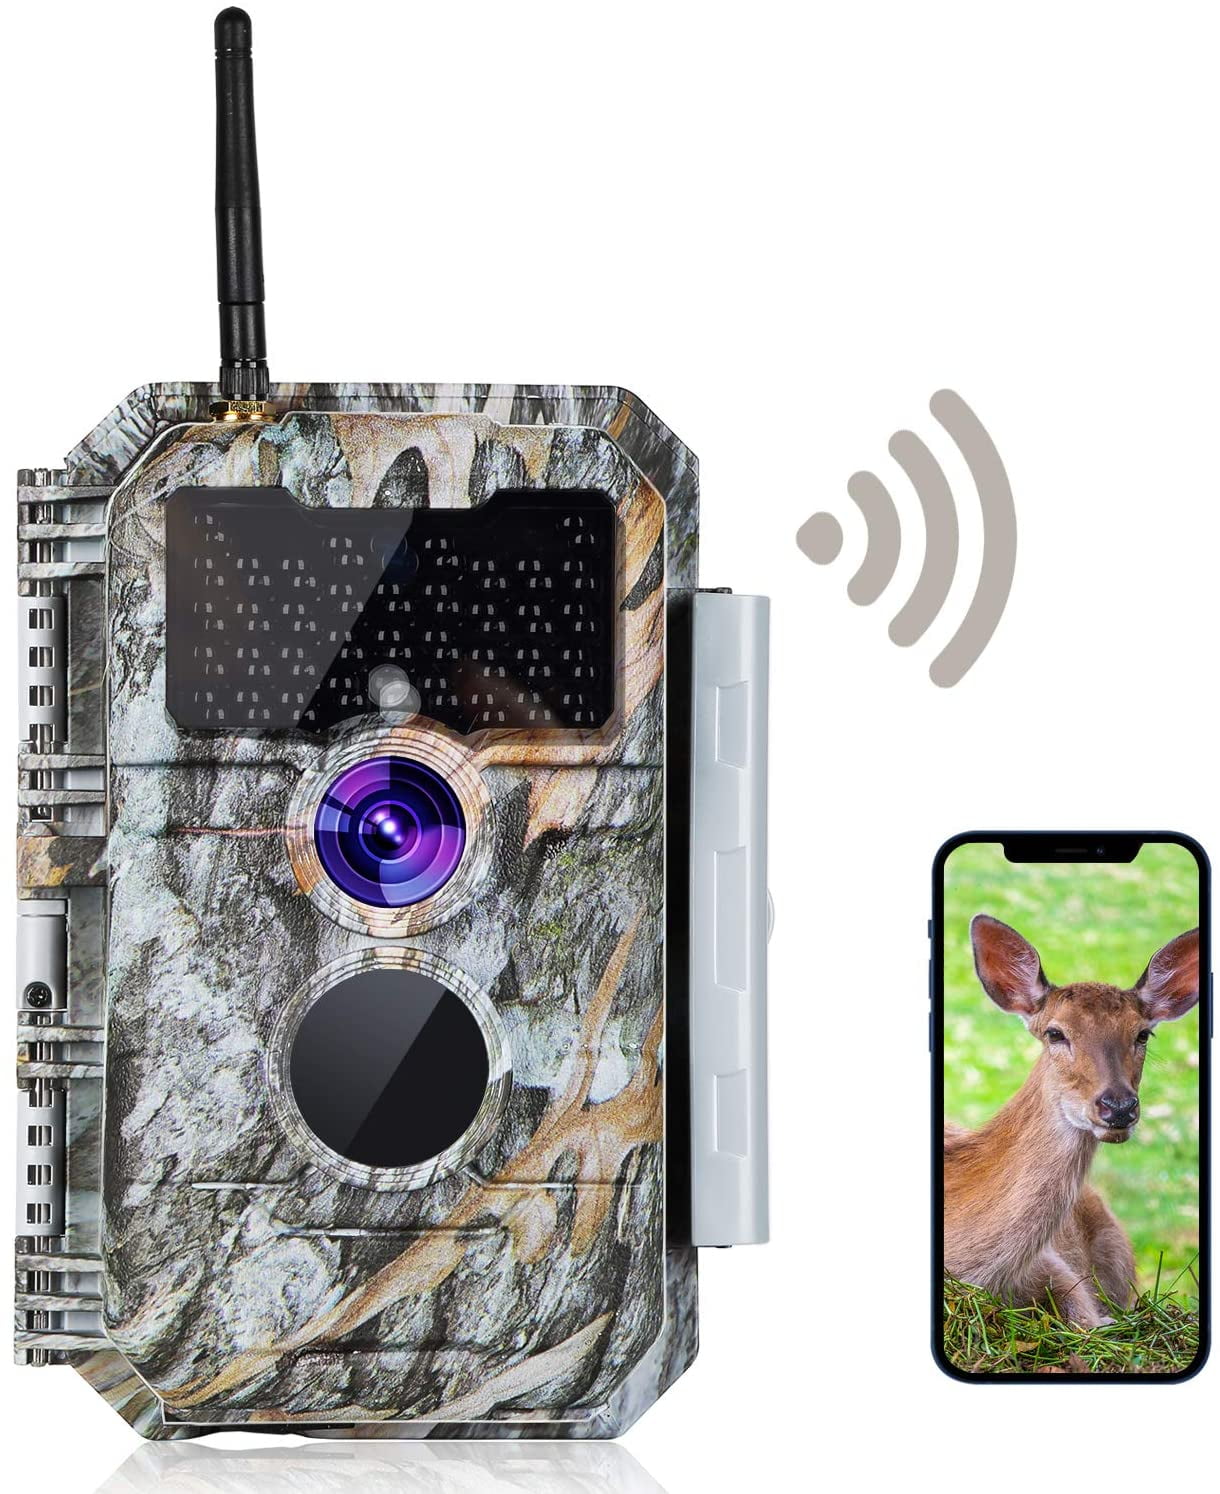 20/16/12MP 1080P Trail Camera Wireless Farm Security 120° IR LEDs Video Recorder 